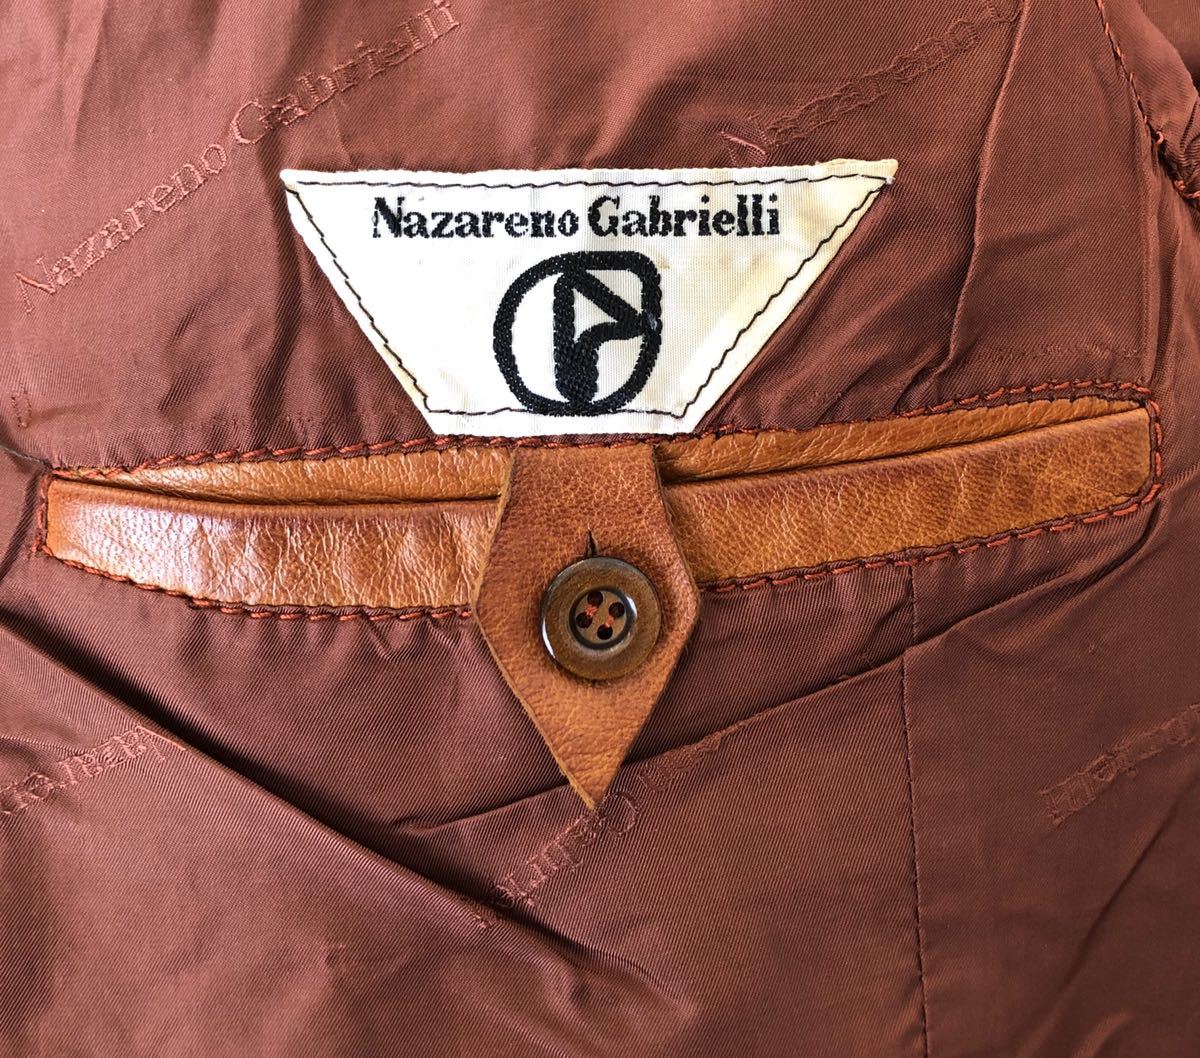 Nazareno Gabrielli Vintage イタリア製 2wayバッグ ショルダーバッグ